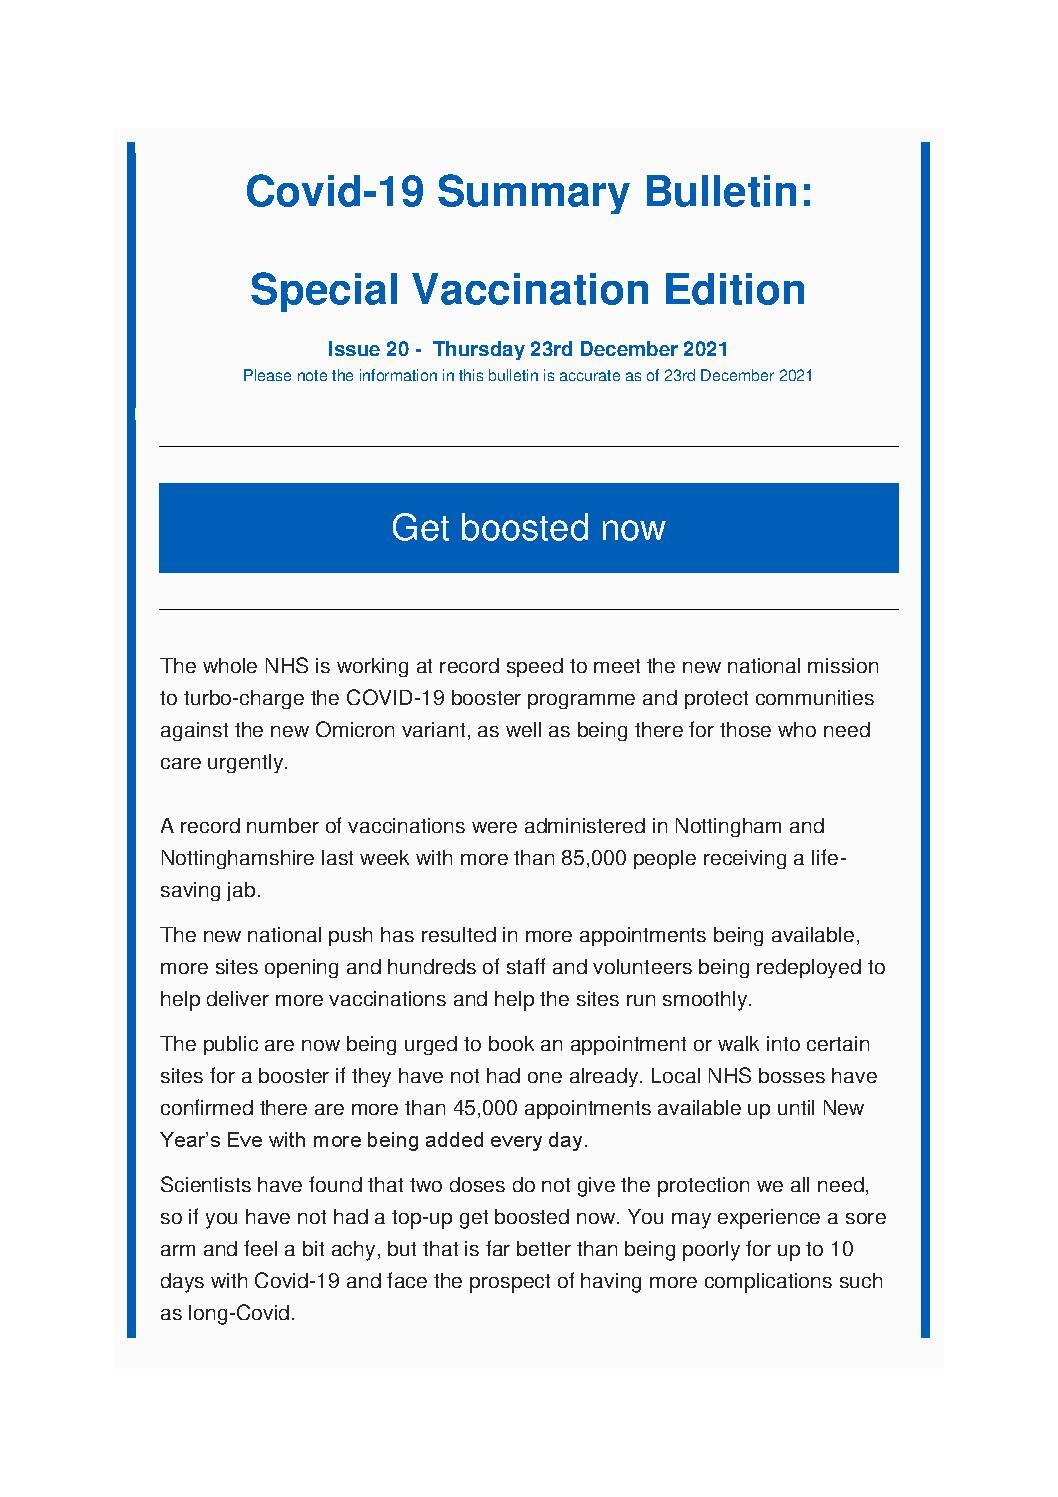 Covid-19 Special Vaccination Edition 12 23 December 2021